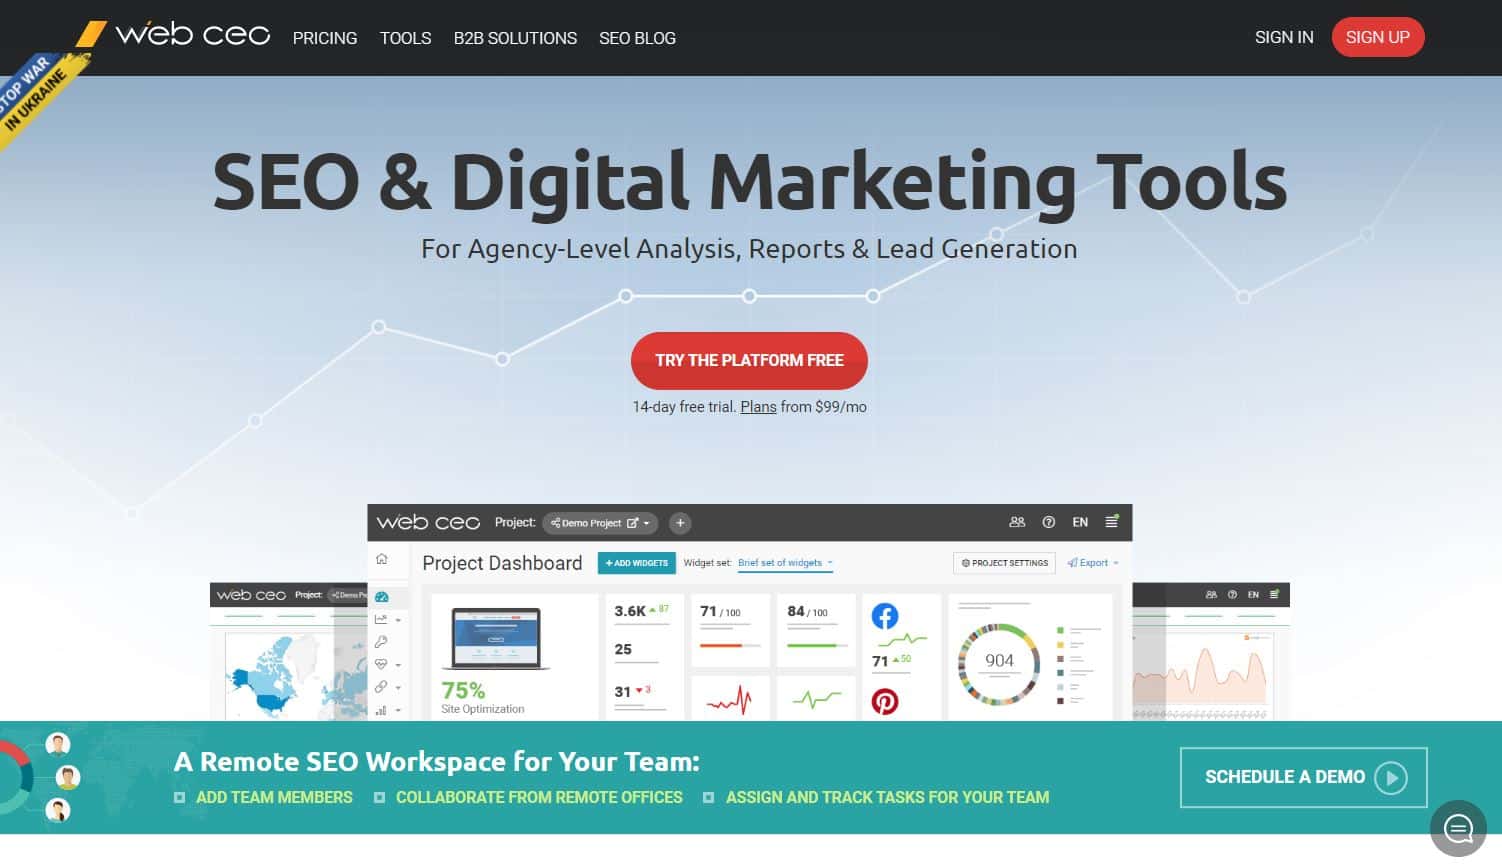 De WebCEO startpagina met de kop "SEO & Digital Marketing Tools".